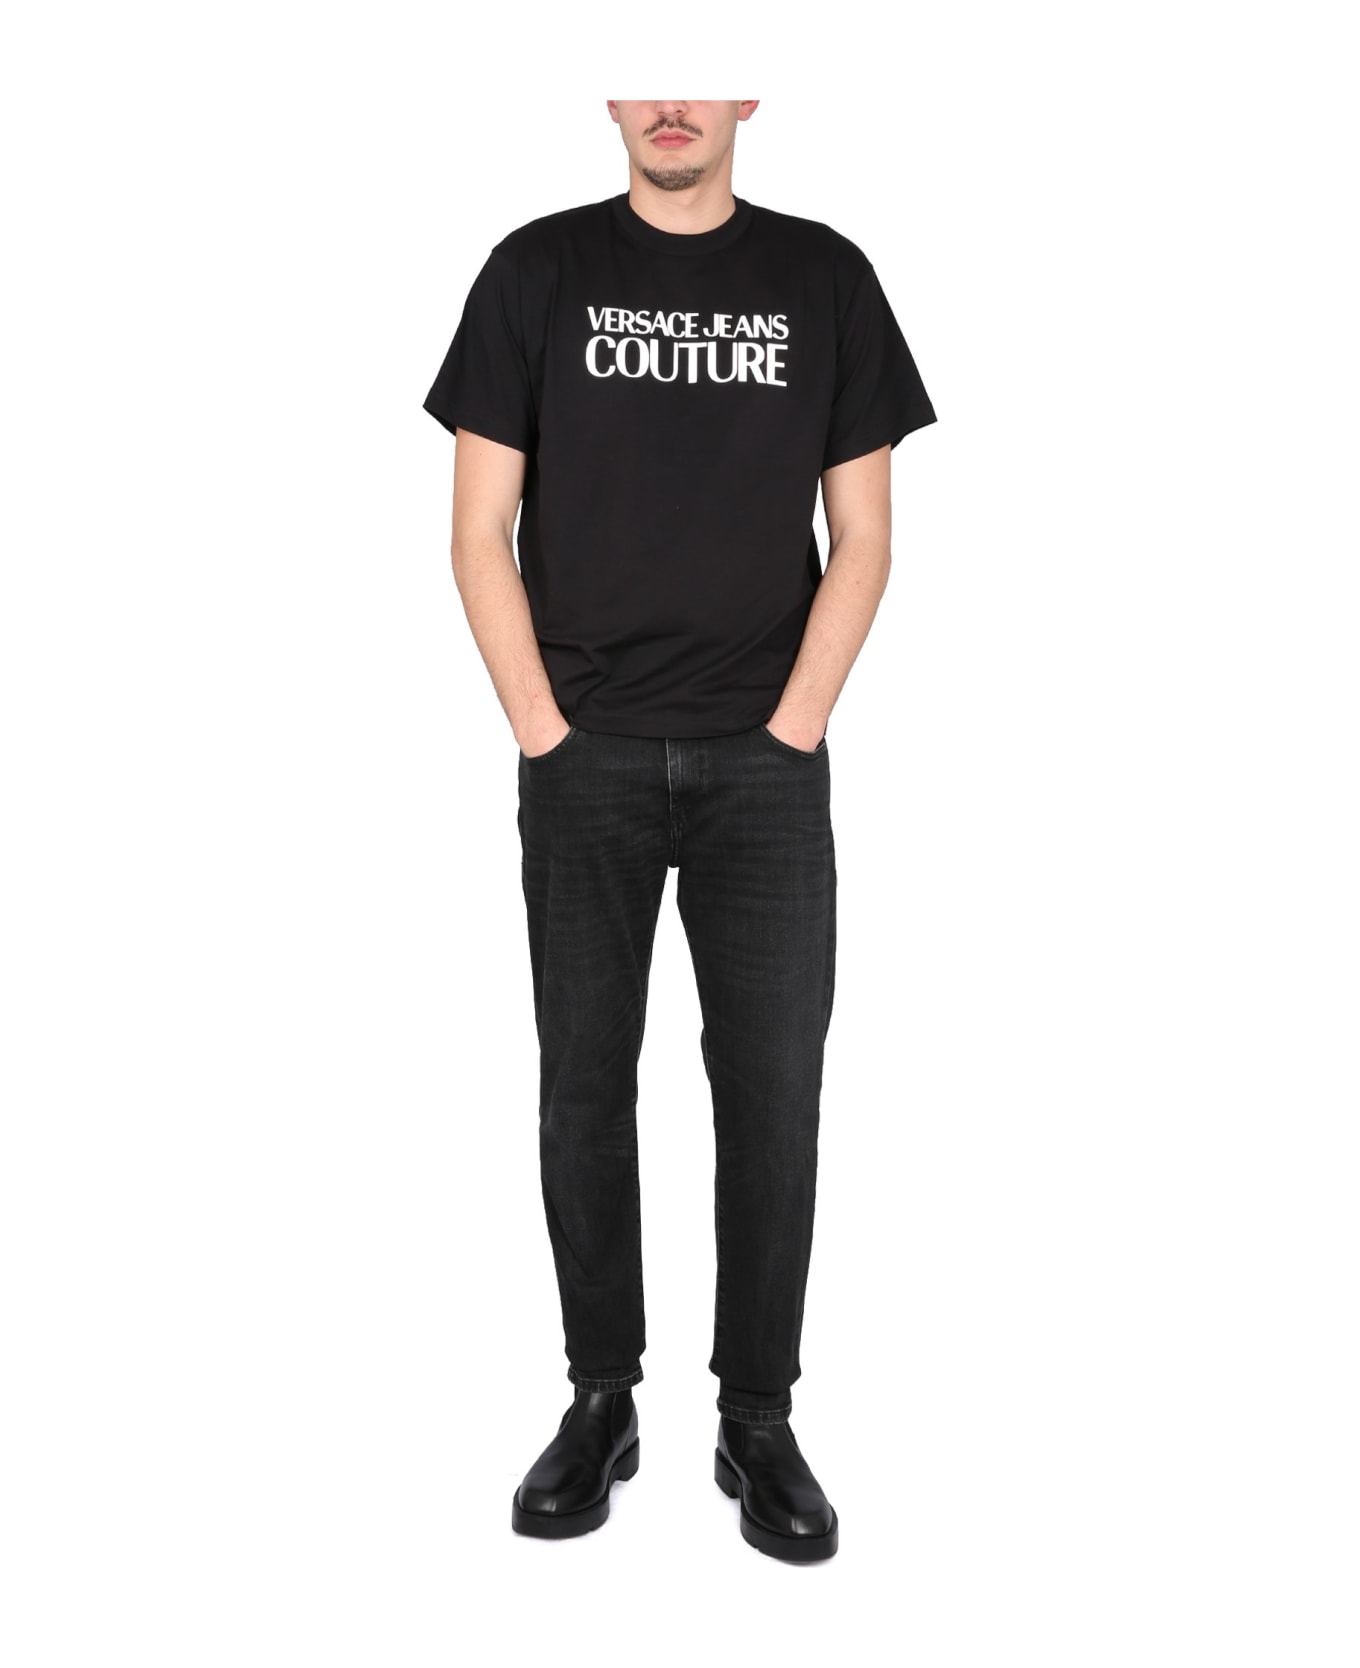 Versace Jeans Couture T-shirt - BLACK